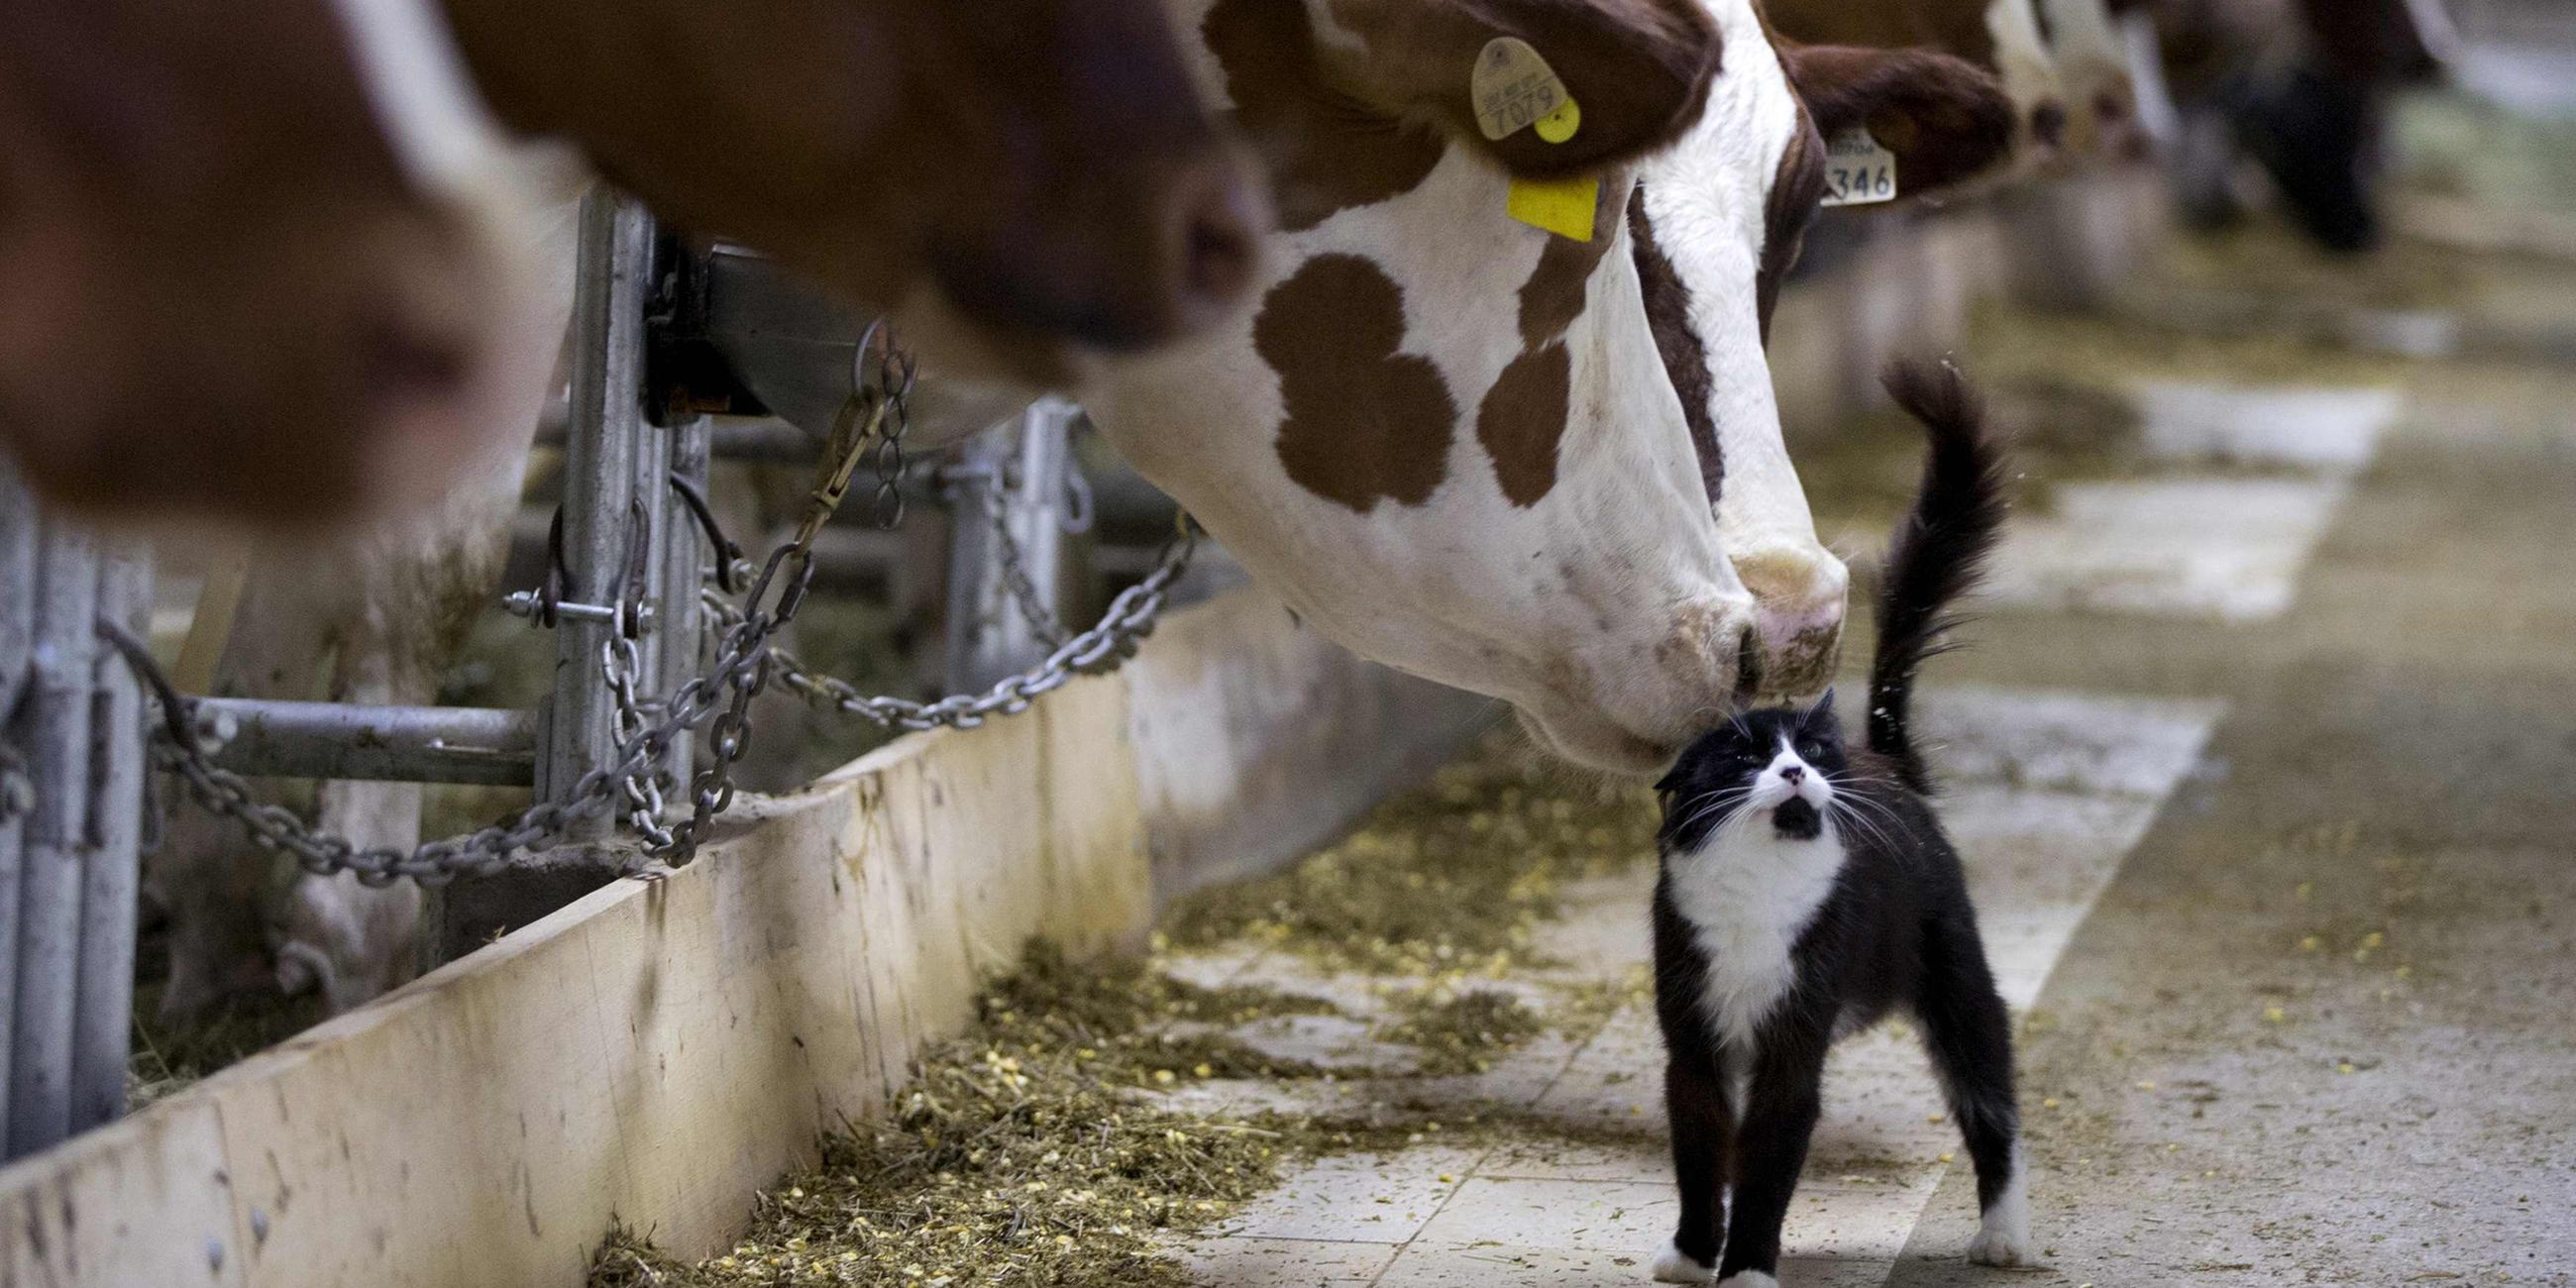 Archiv: Kühe im Kuhstall schnüffeln an Katze